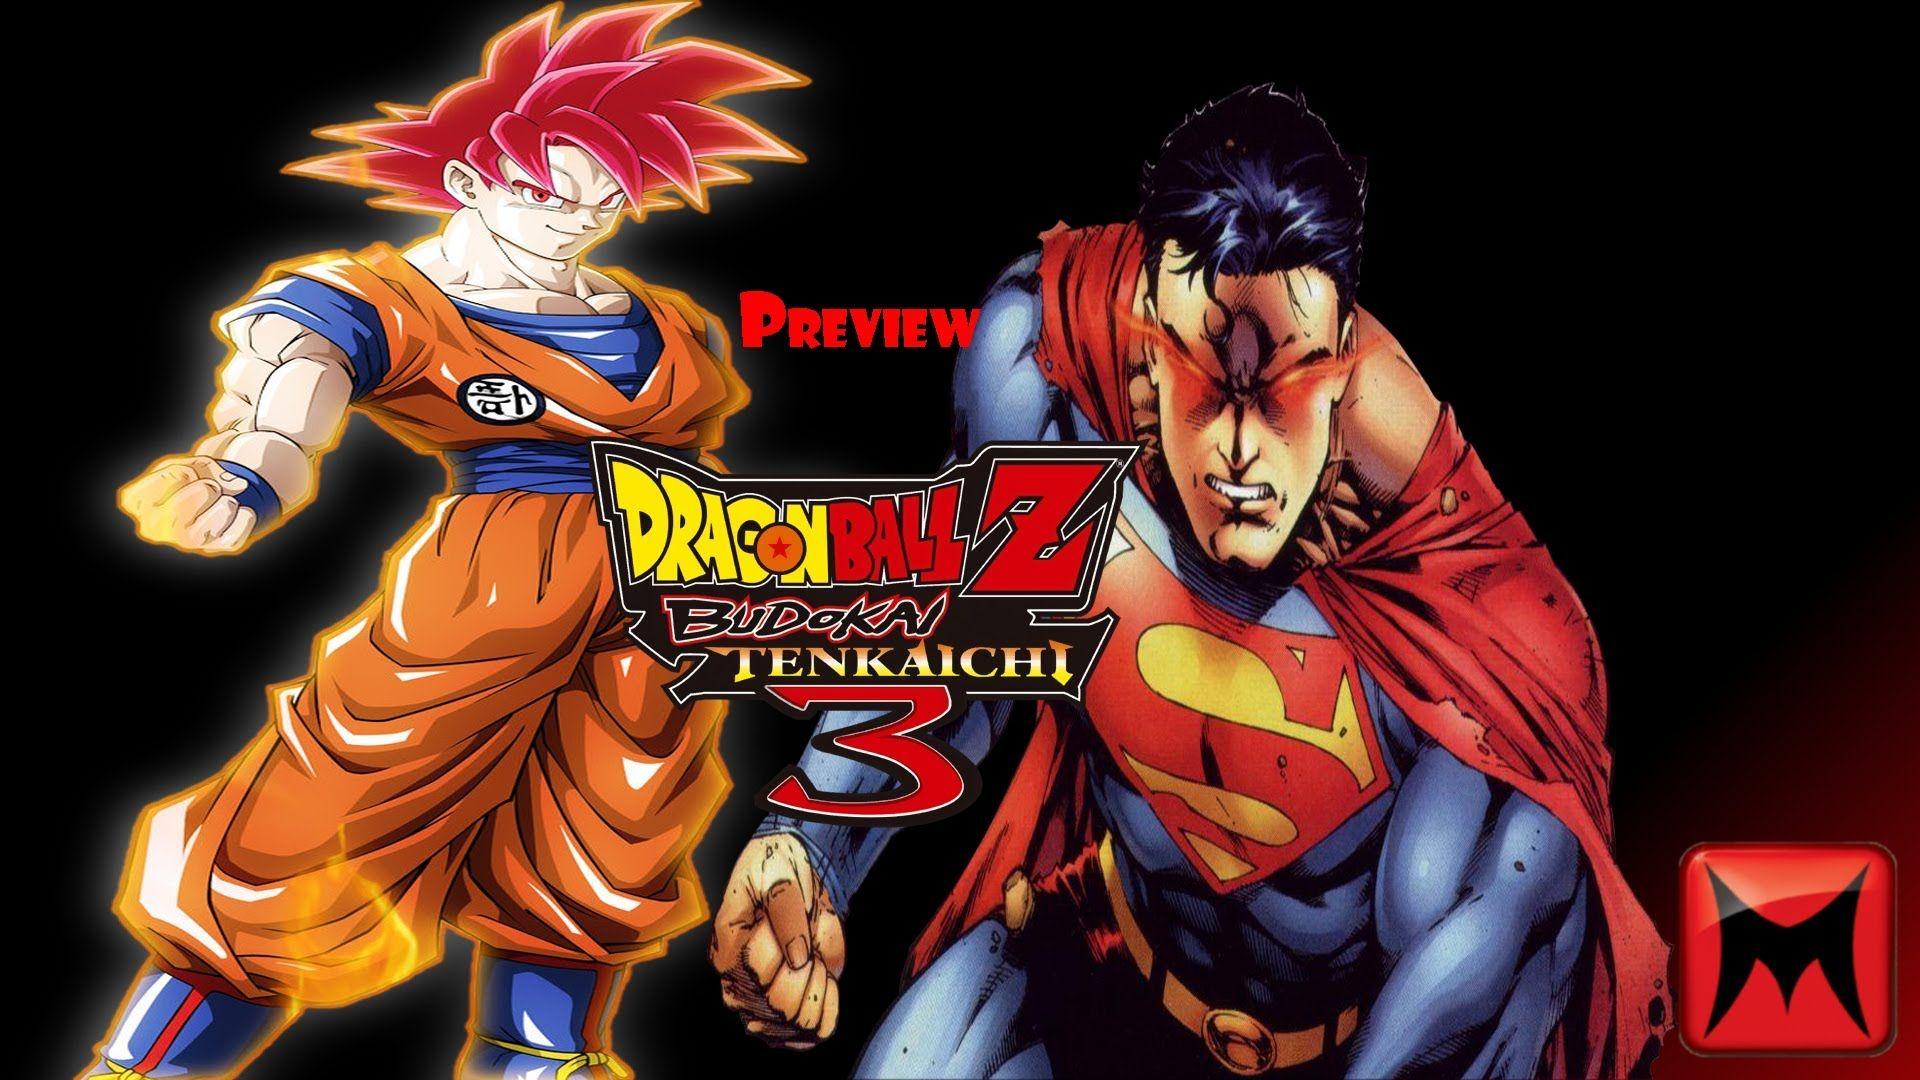 Super Saiyan God Goku vs Superman (Fanfic preview)